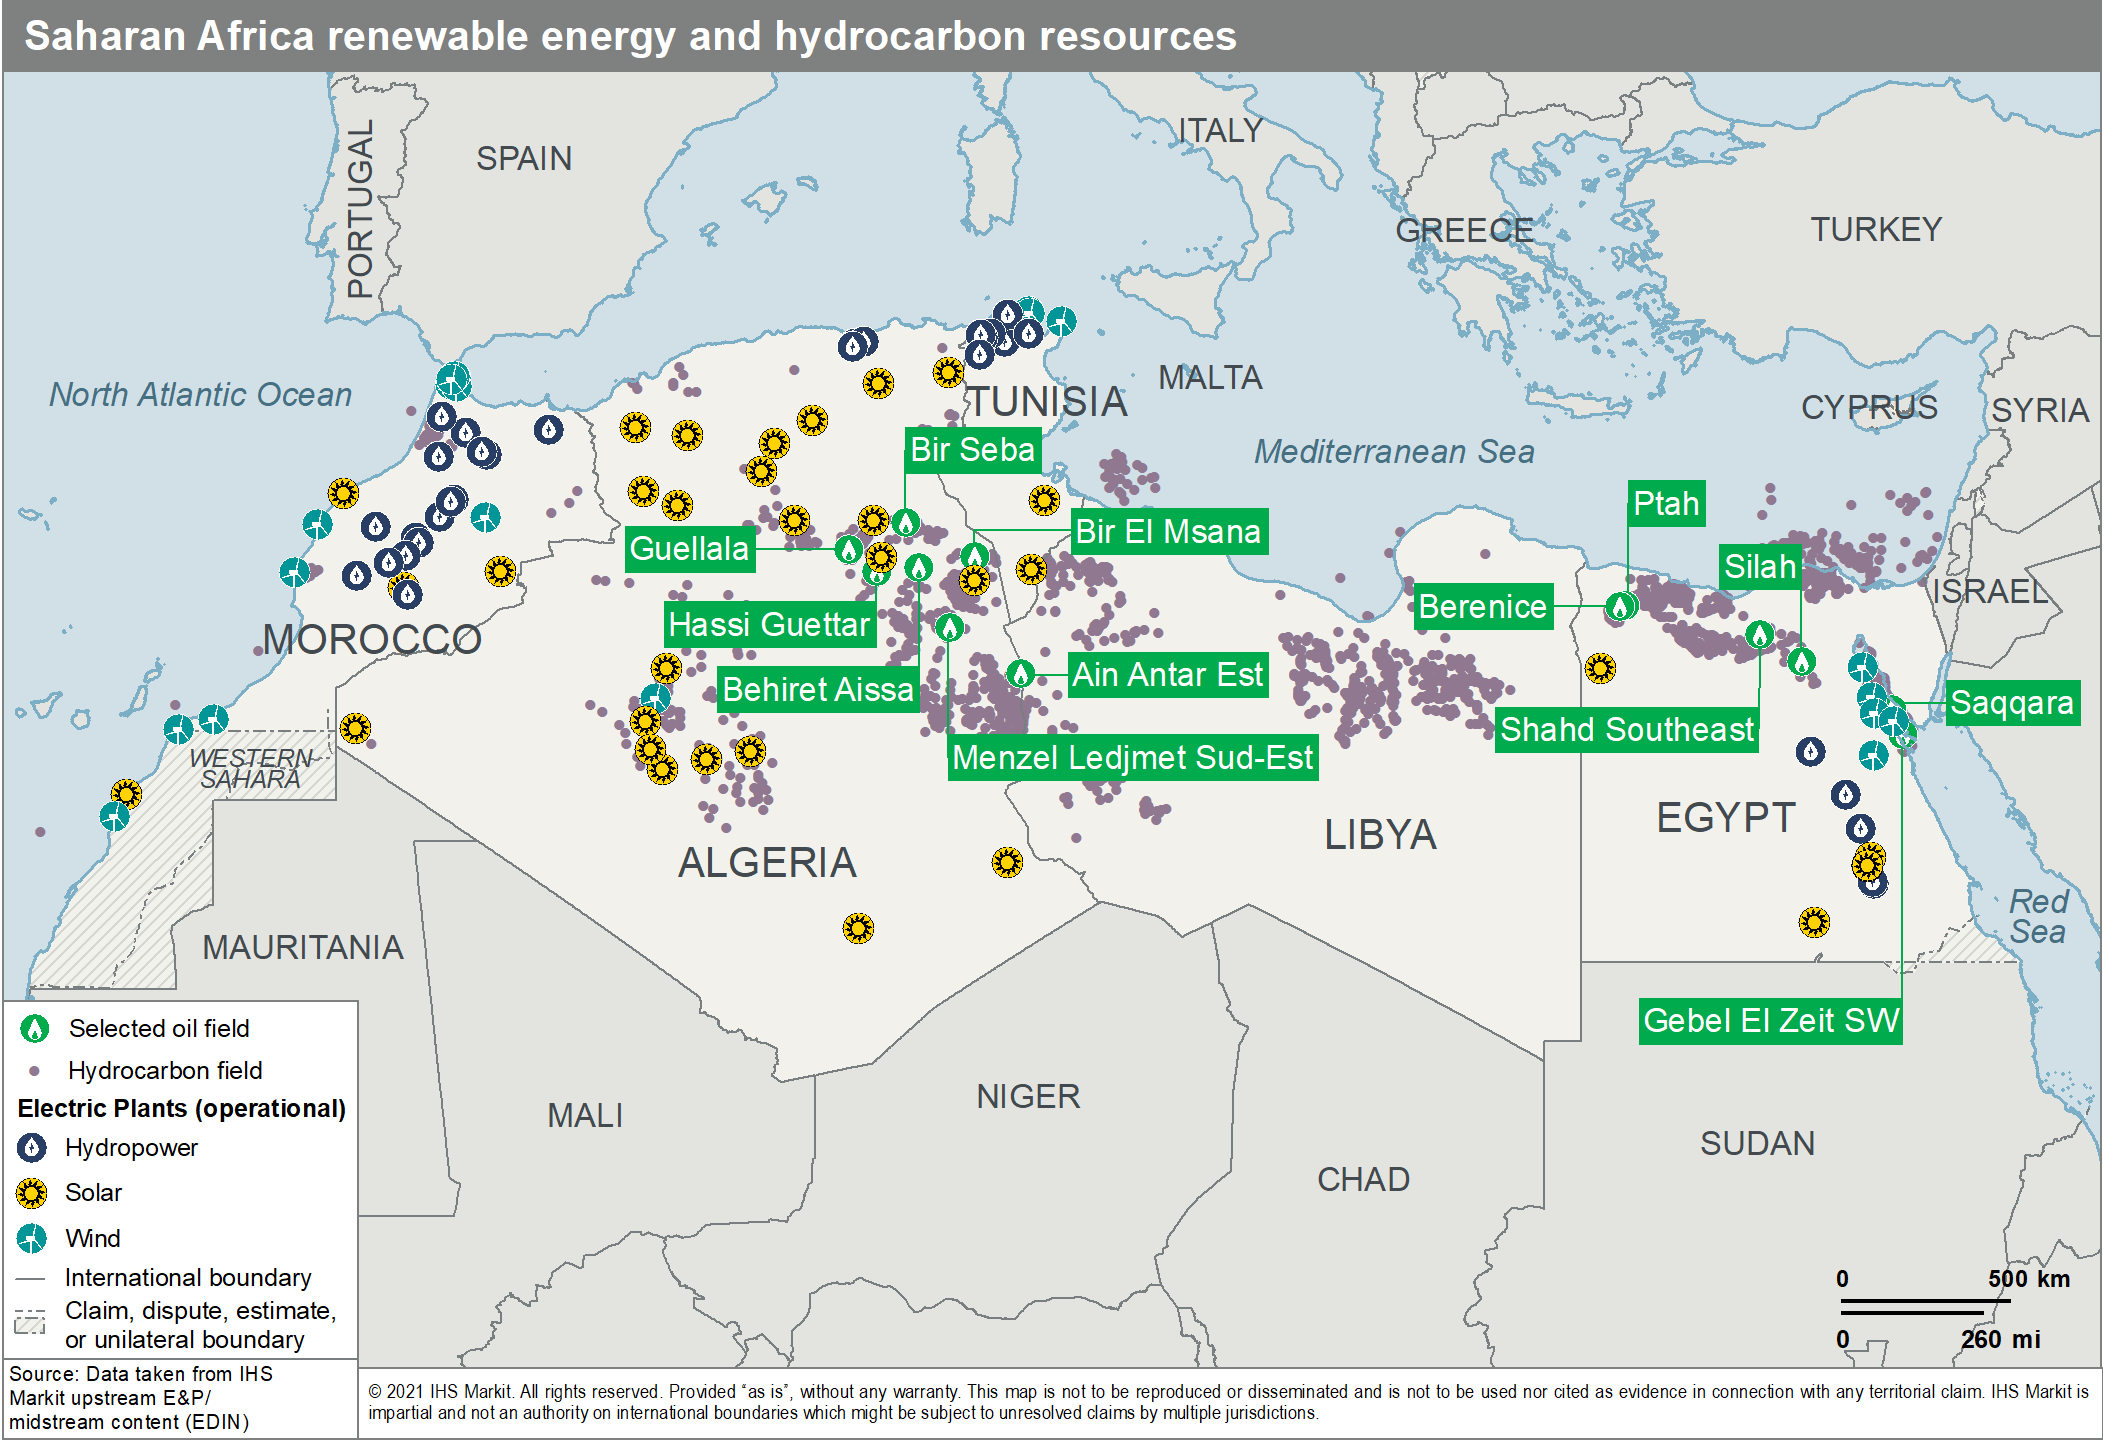 Saharan Africa renewable energy resources